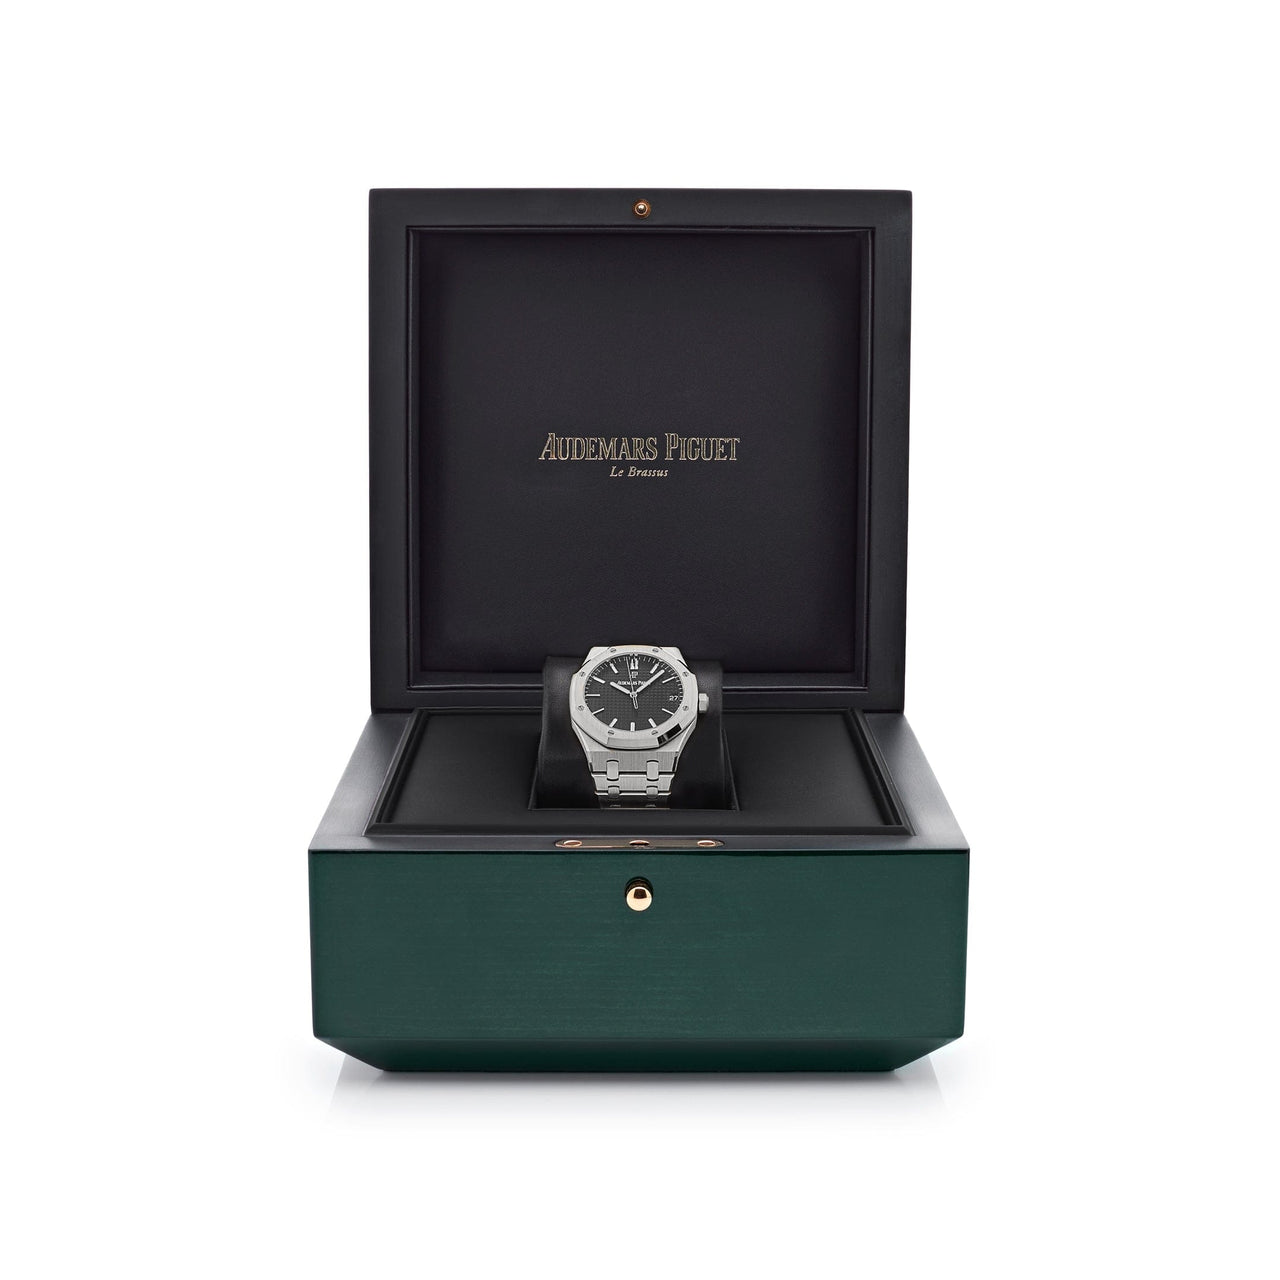 Luxury Watch Audemars Piguet Royal Oak Selfwinding Stainless Steel Black Dial 15500ST.OO.1220ST.03 Wrist Aficionado